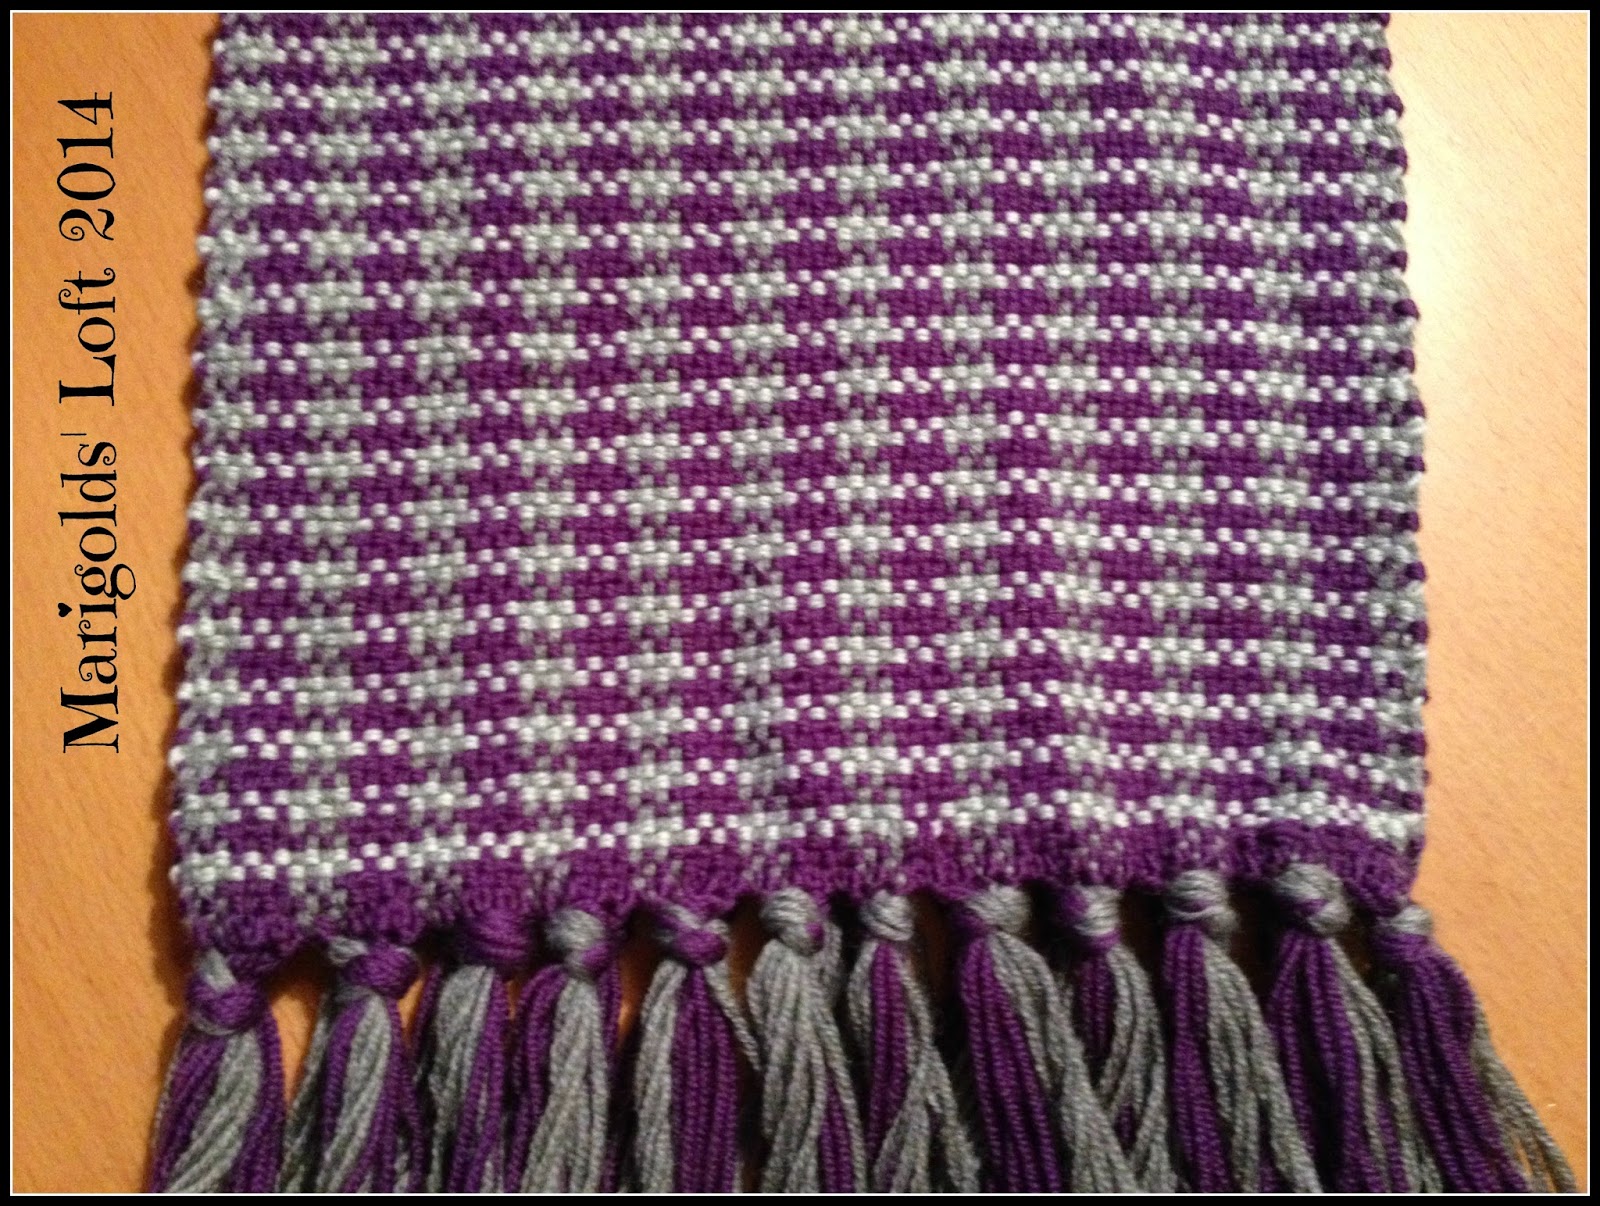 rigid heddle weaving